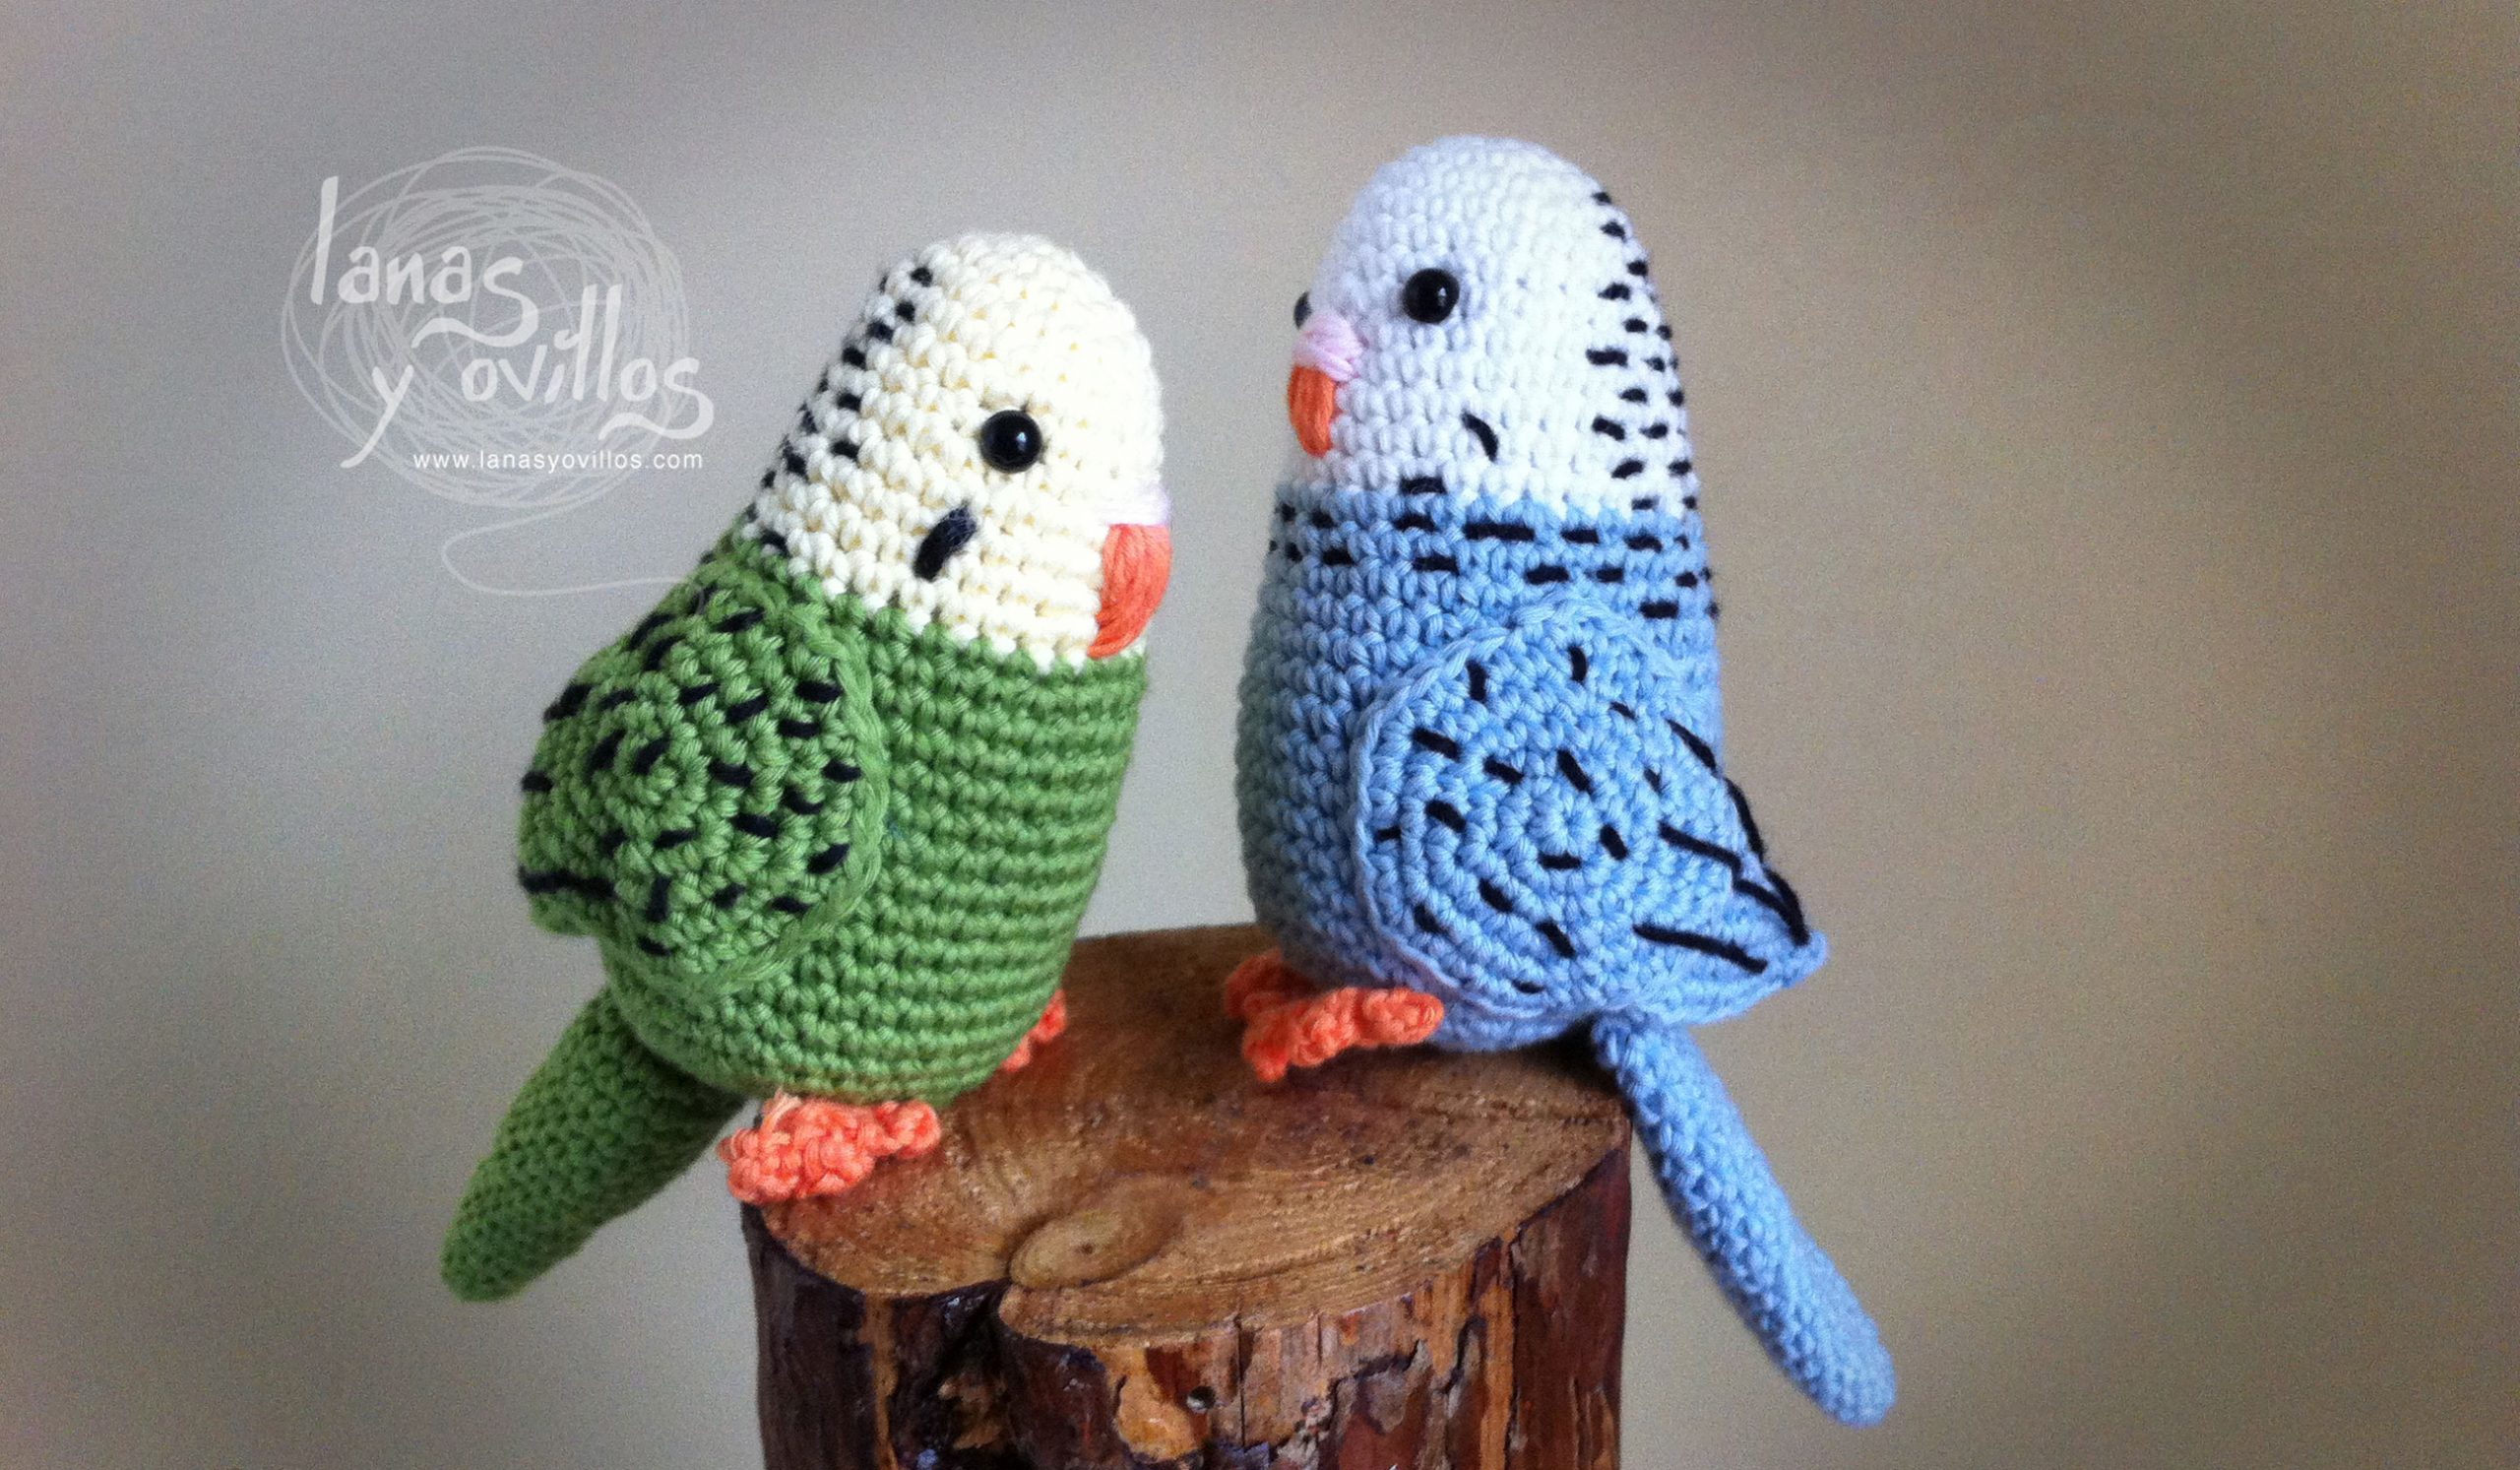 parakeet amigurumi free pattern crochet with video tutorial